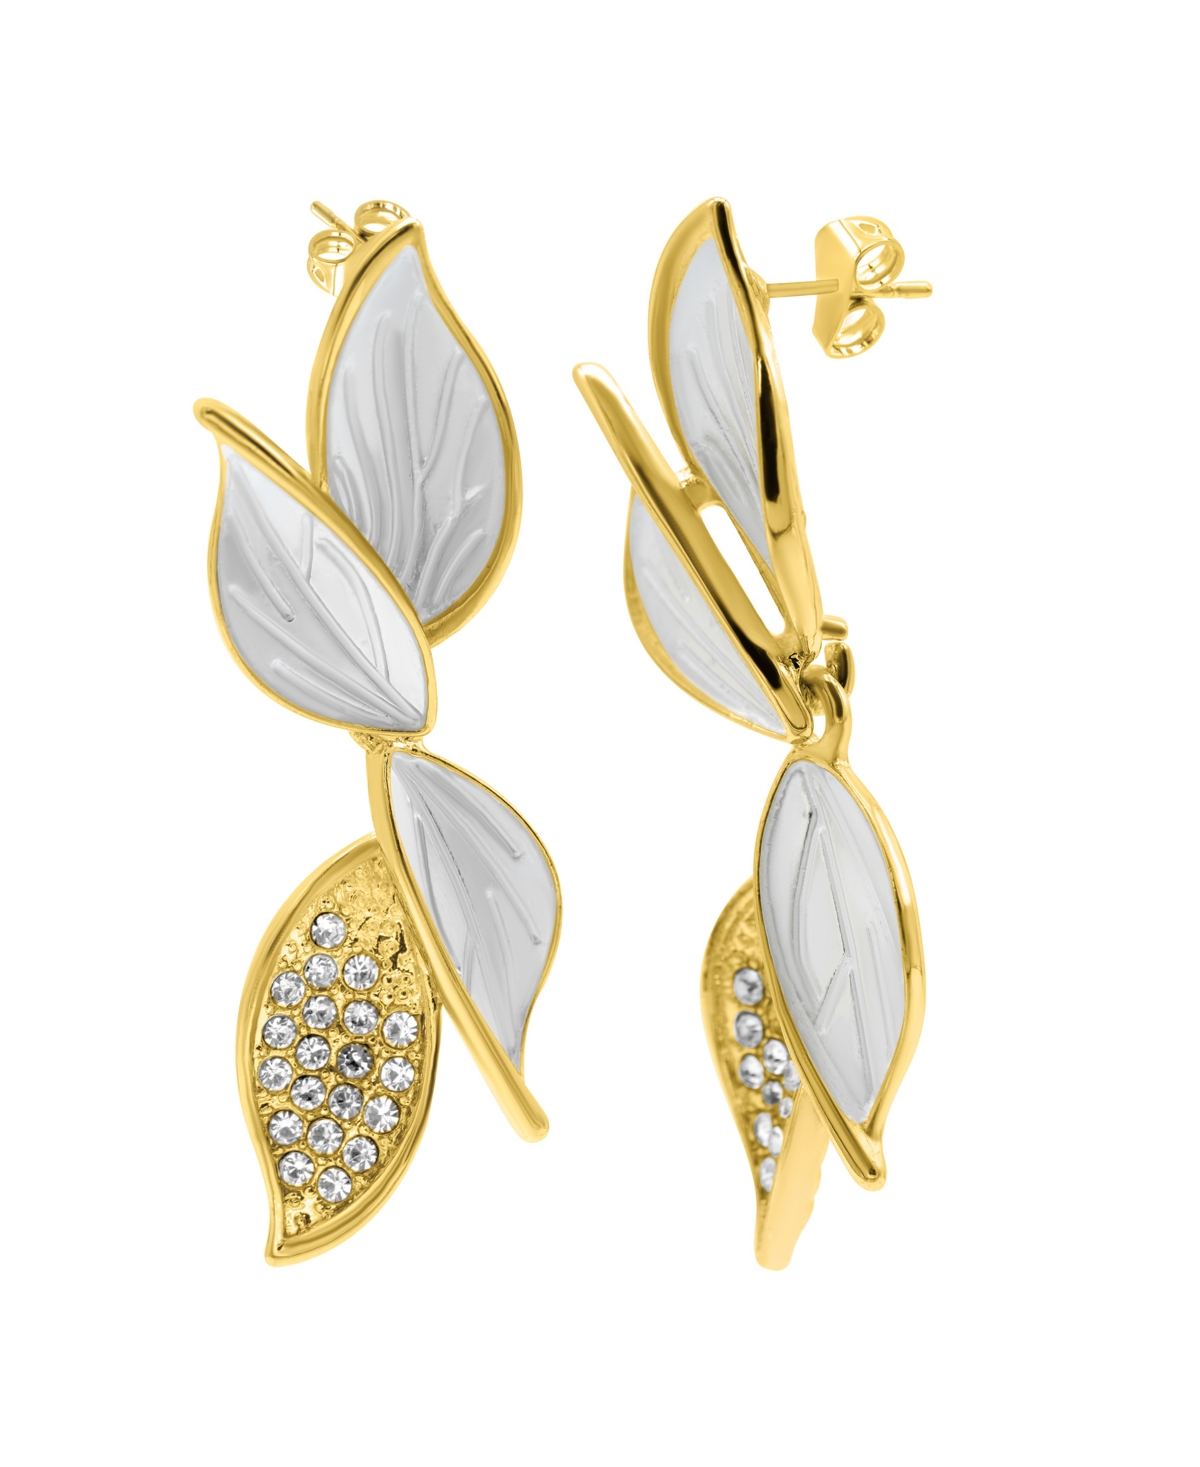 14K Gold-Plated Crystal Flower Branch Leaf Earrings - Gold